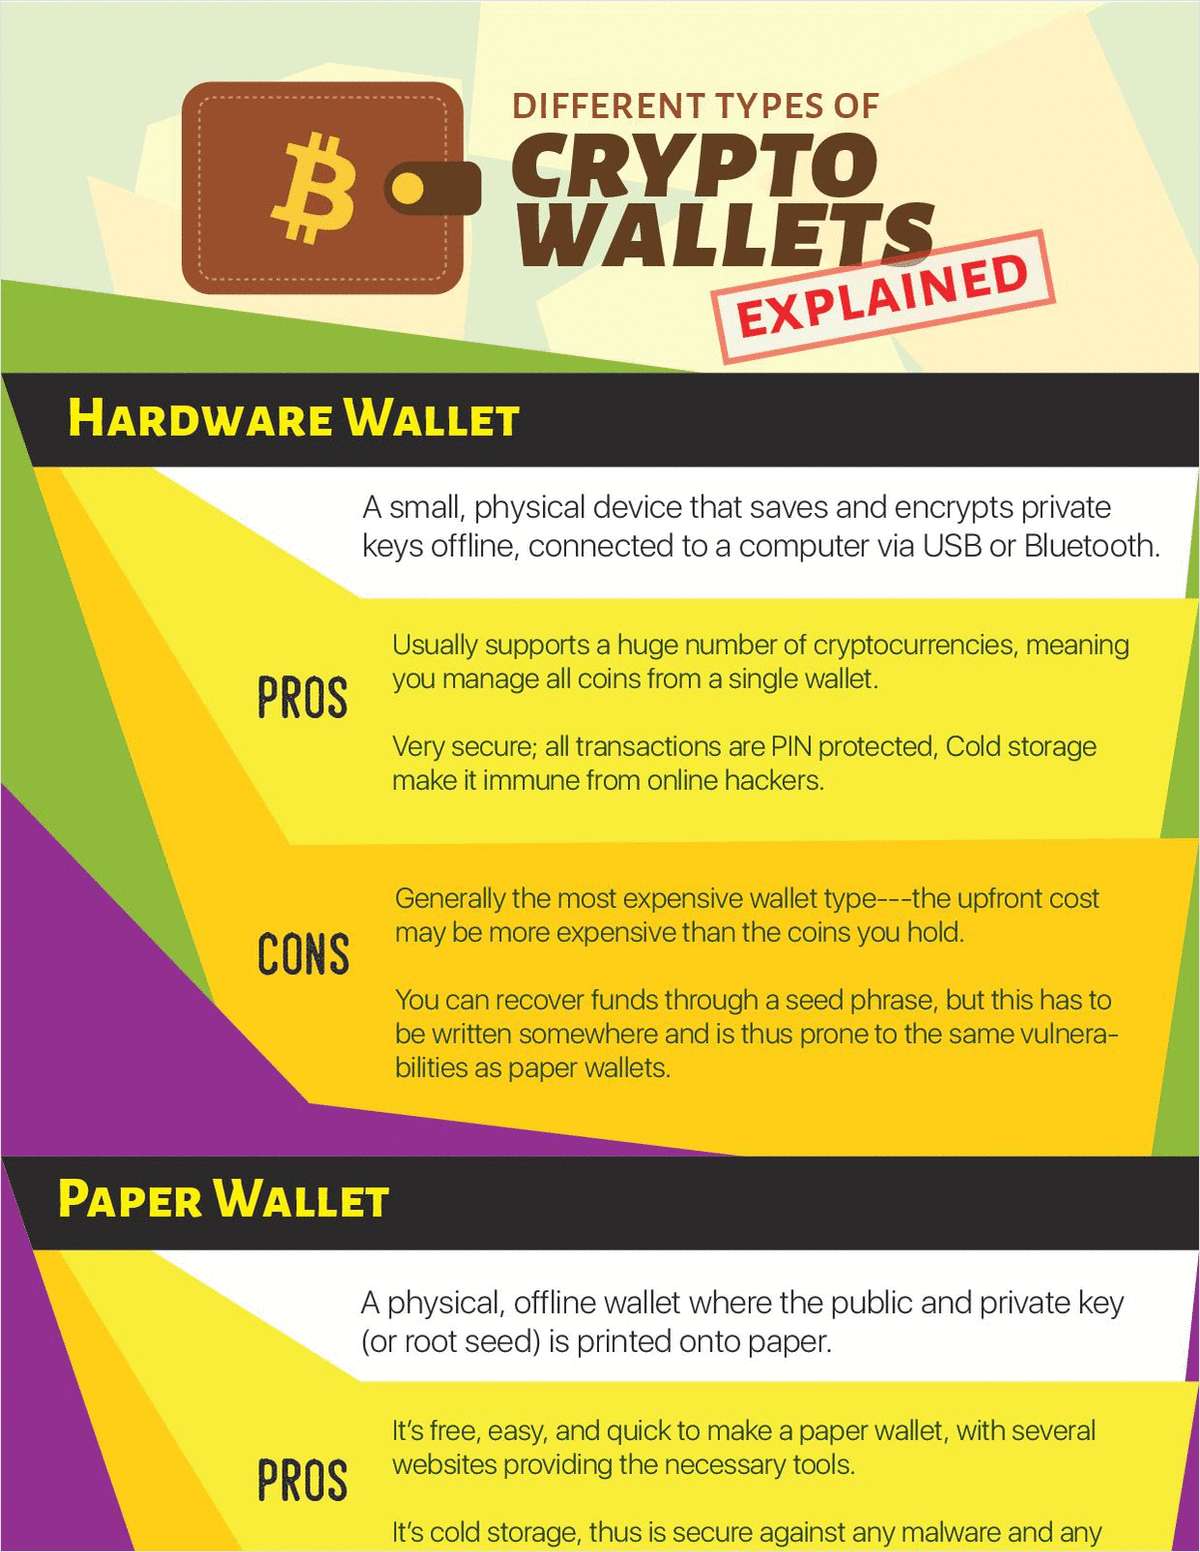 crypto.com wallets explained